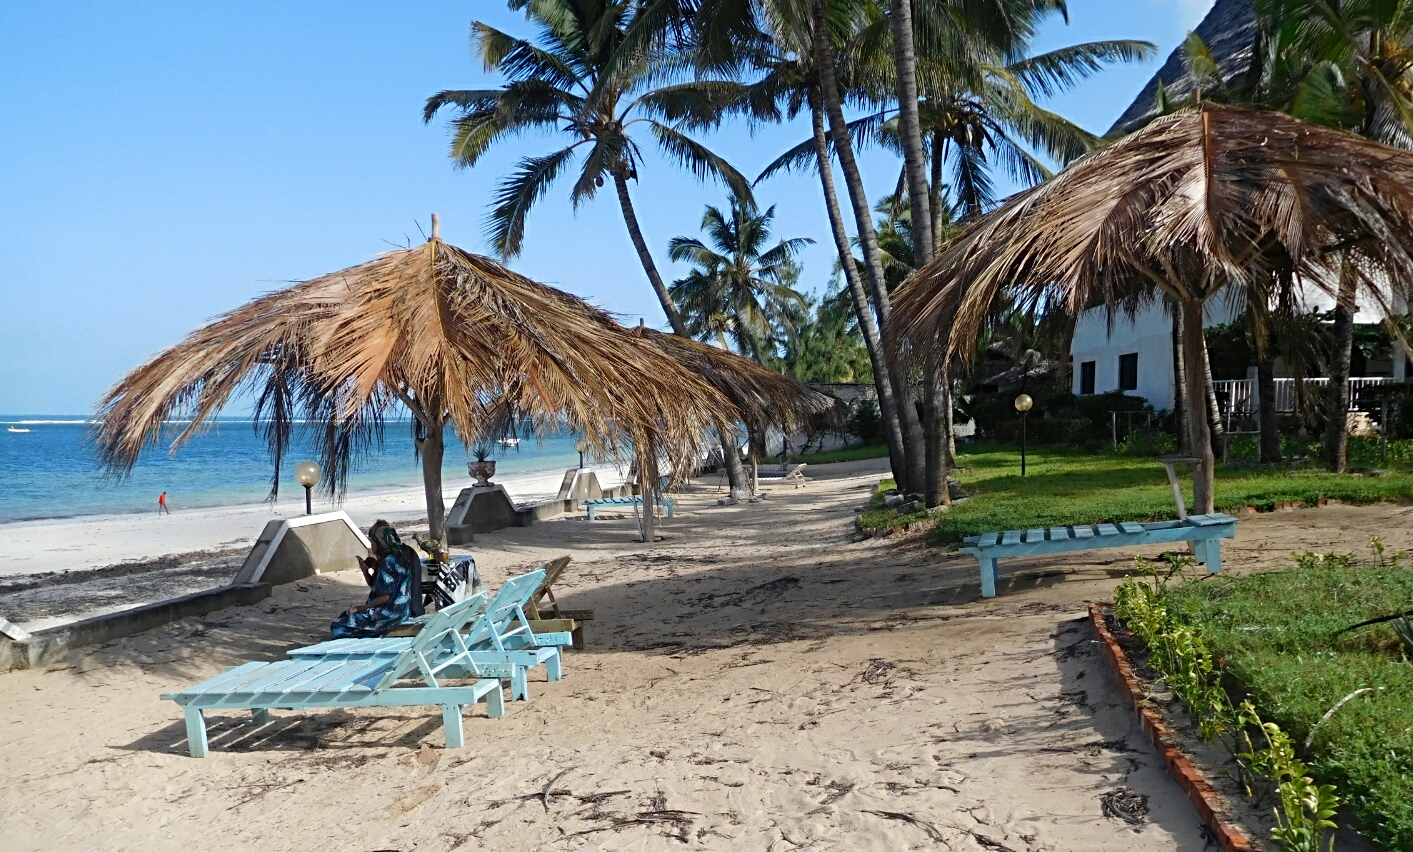 Foto de Silversands Beach - lugar popular entre os apreciadores de relaxamento